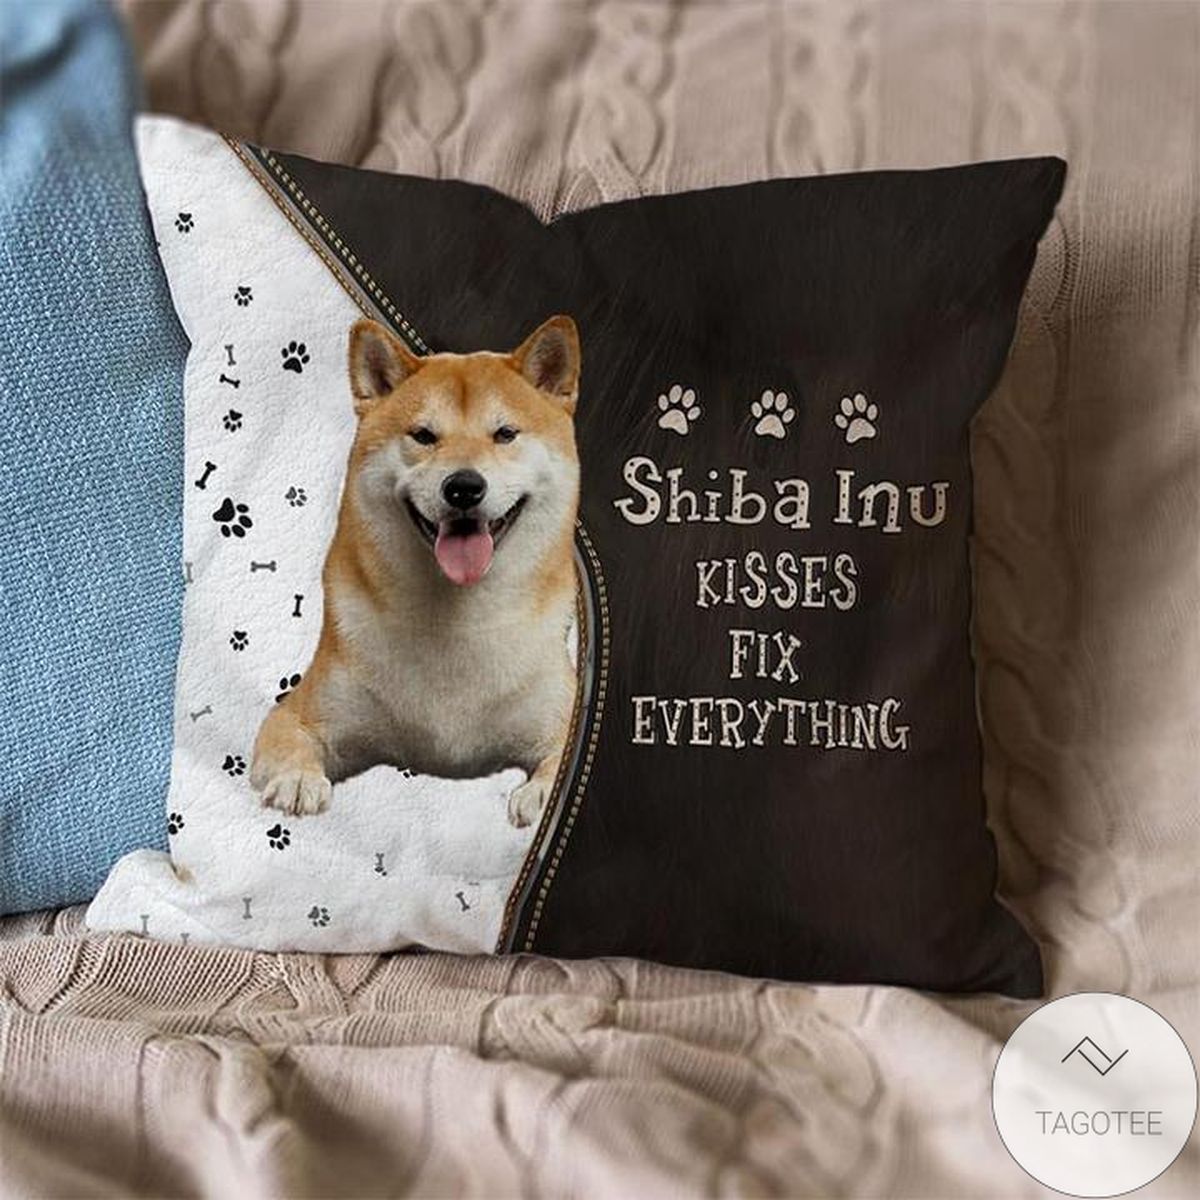 Shiba Inu Kisses Fix Everything Pillowcase